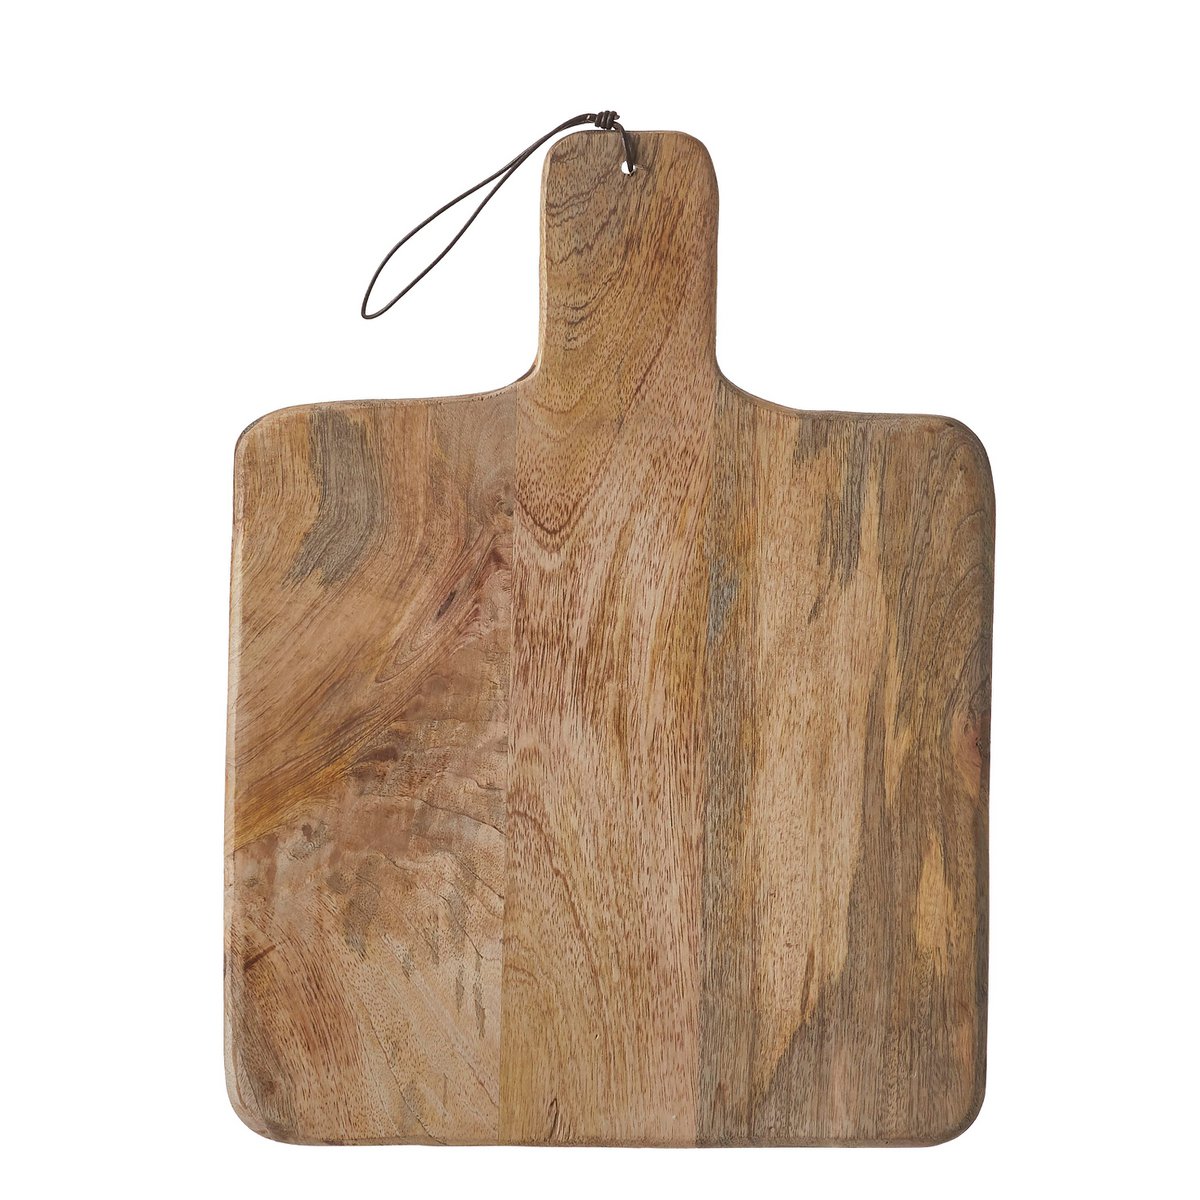 Duko serving board made from 100% FSC mango wood - L40 x W30 cm